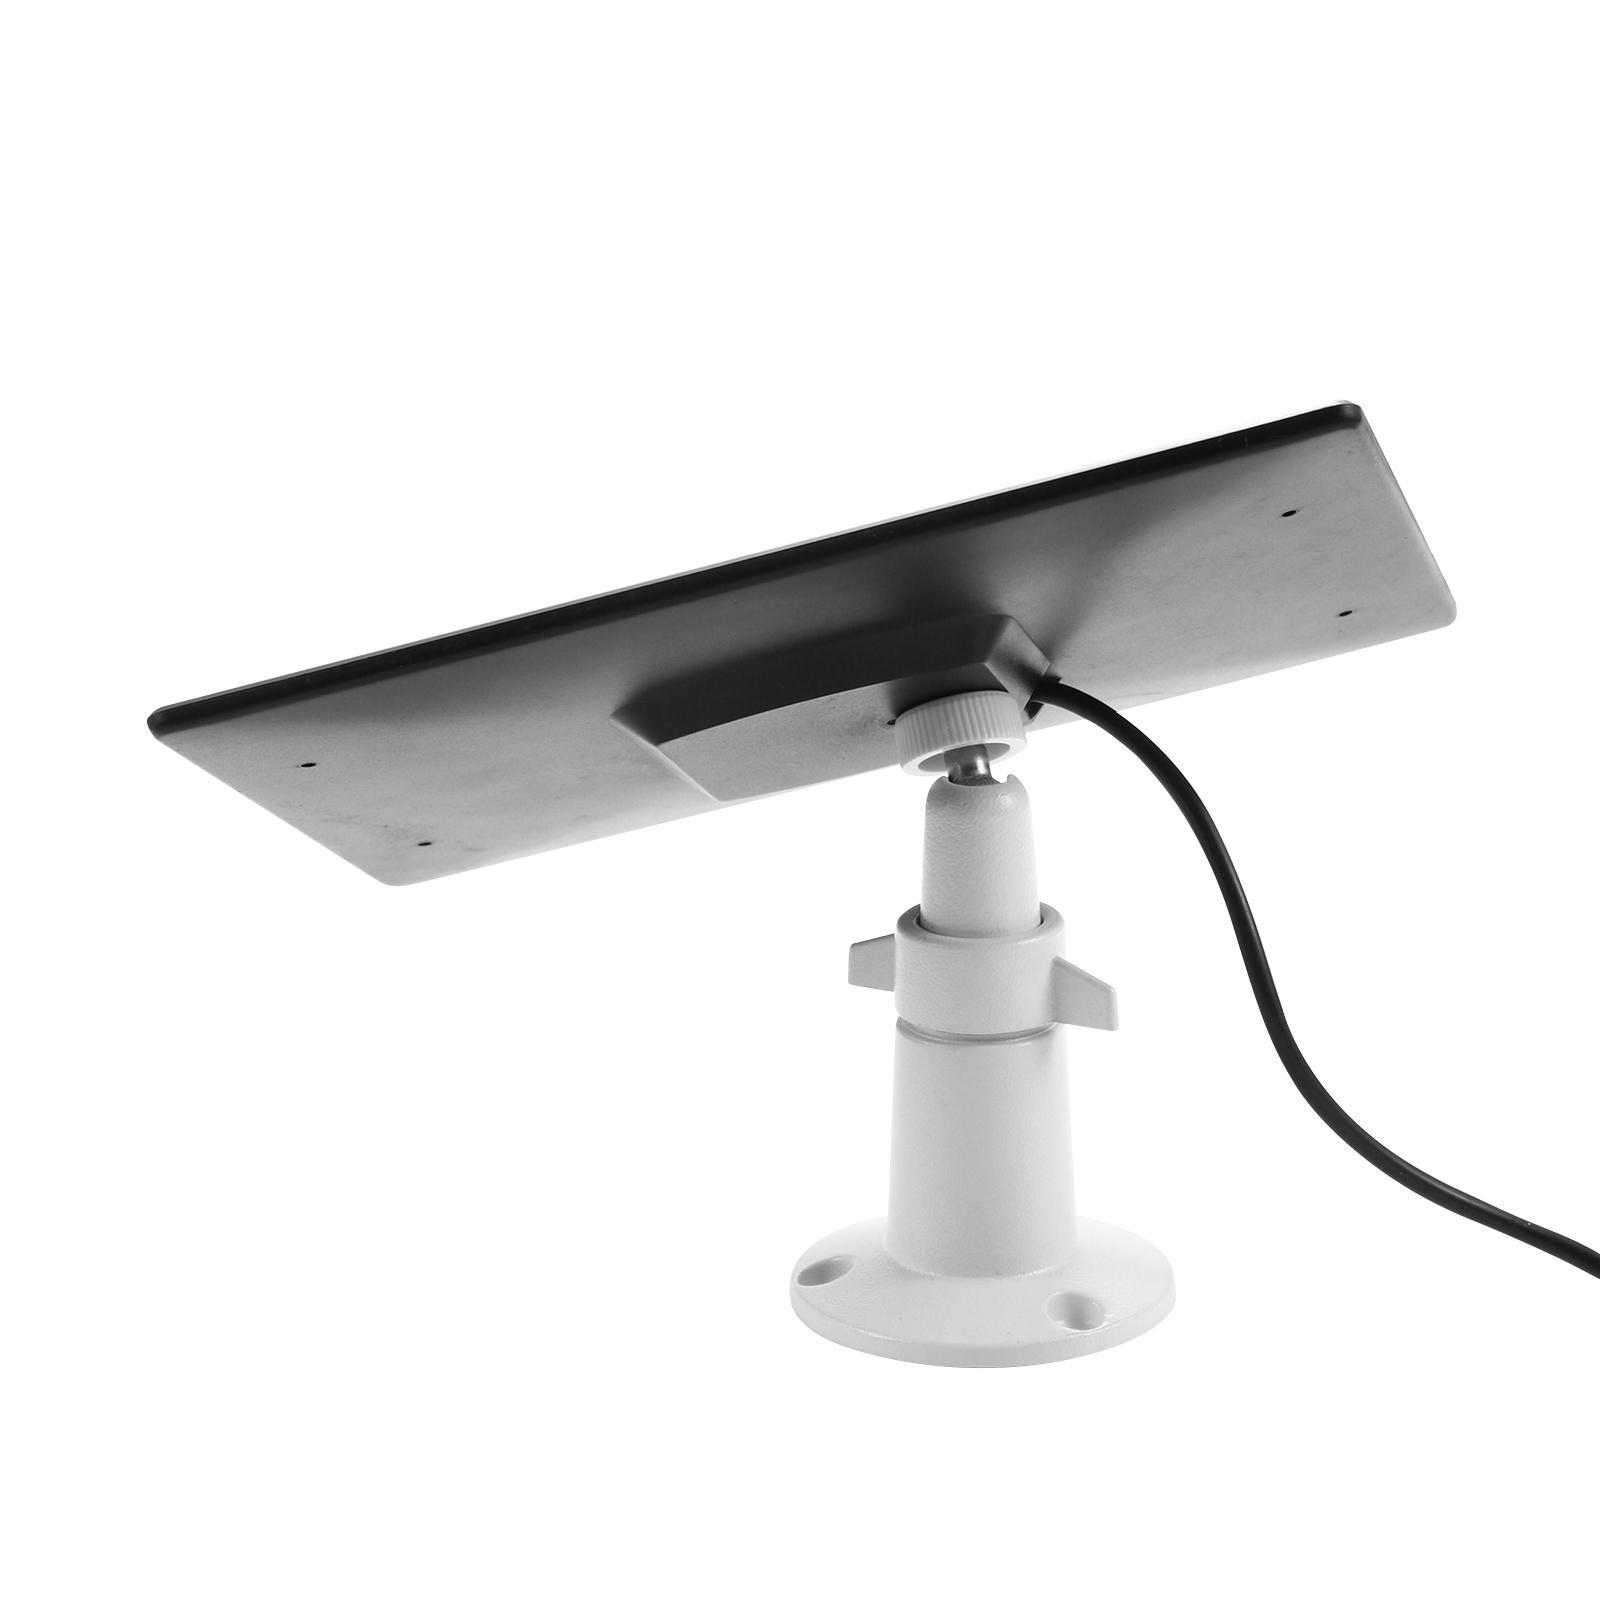 Camera Bracket Bracket 360 Swivel Durable for Ceiling Indoor